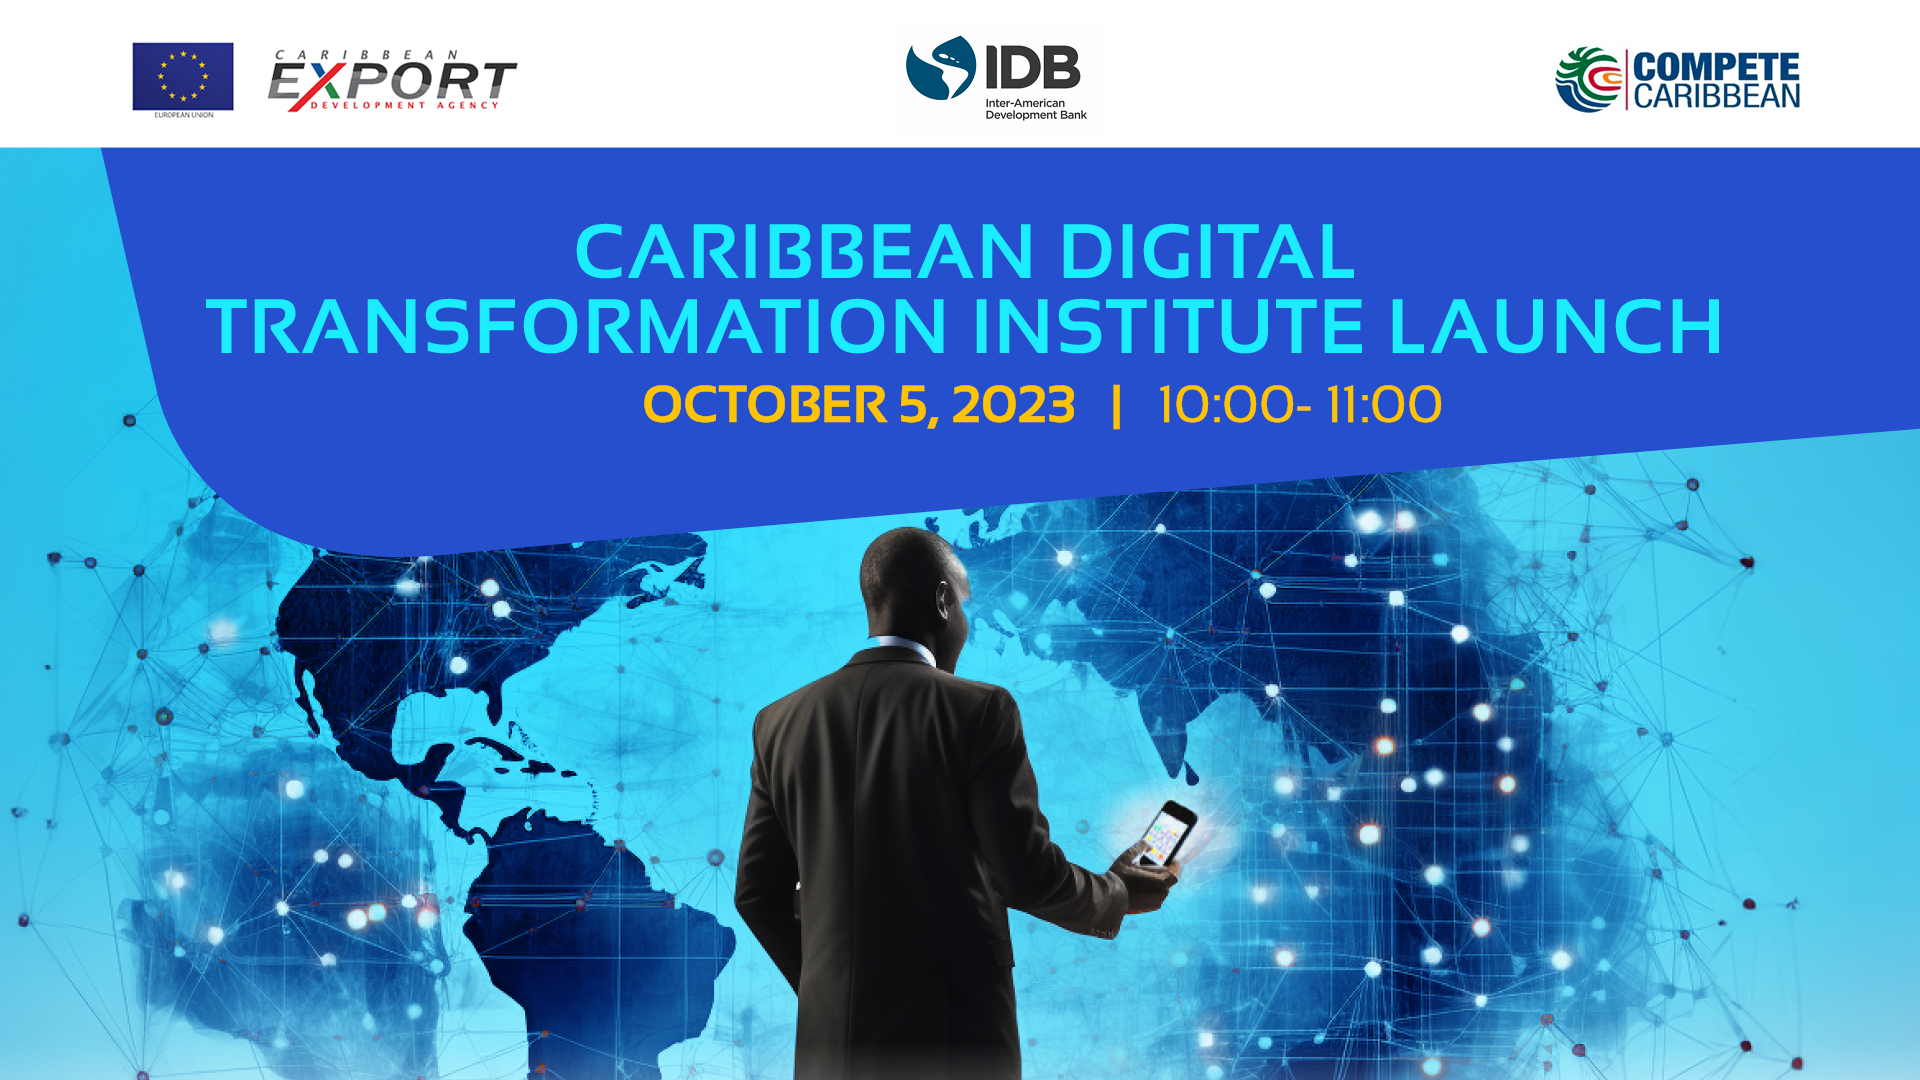 The Caribbean Digital Transformation Institute Launch